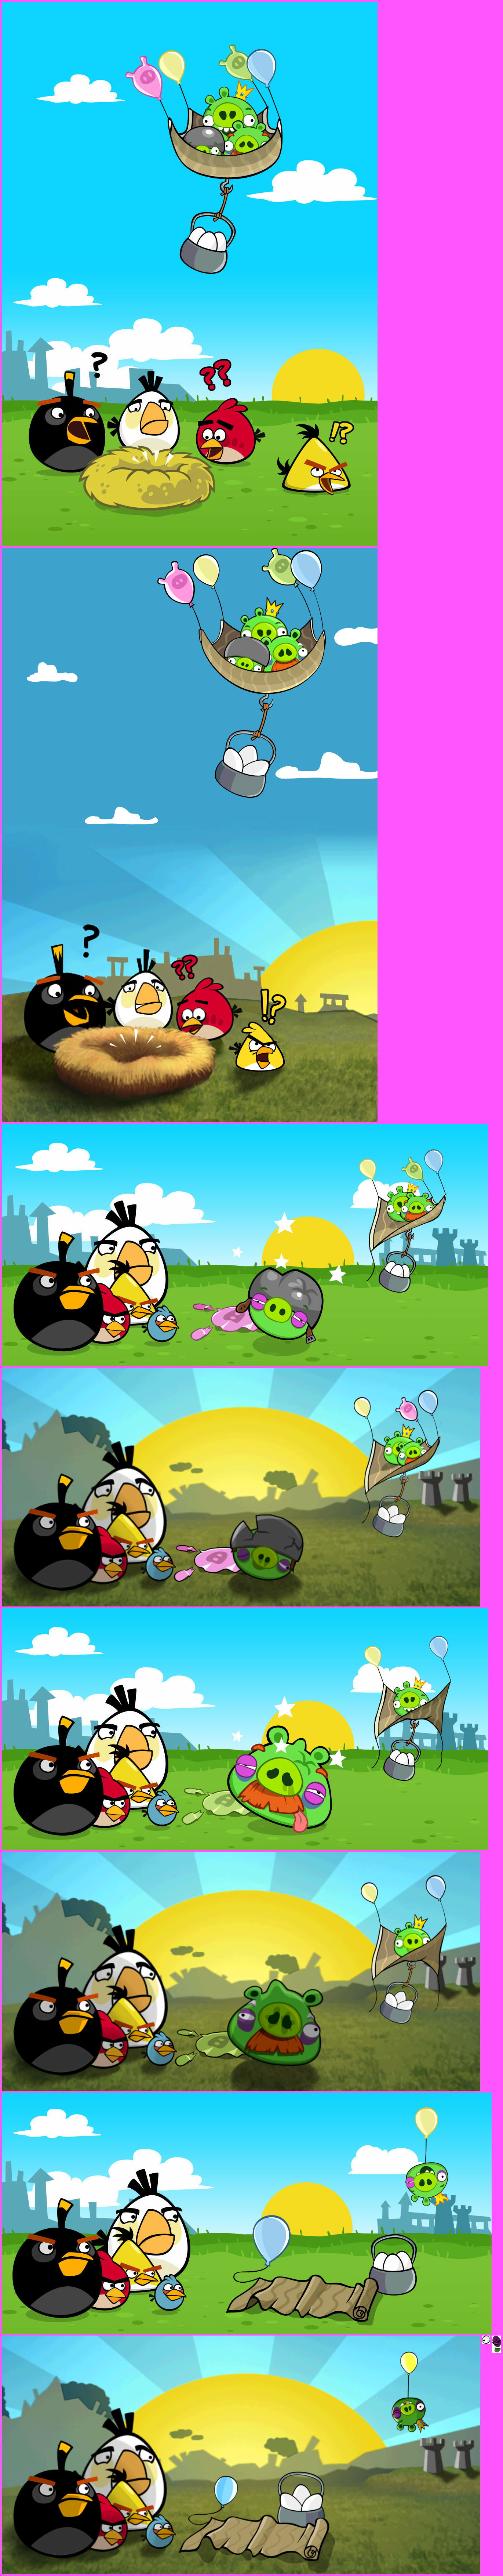 Angry Birds Chrome - Danger Above